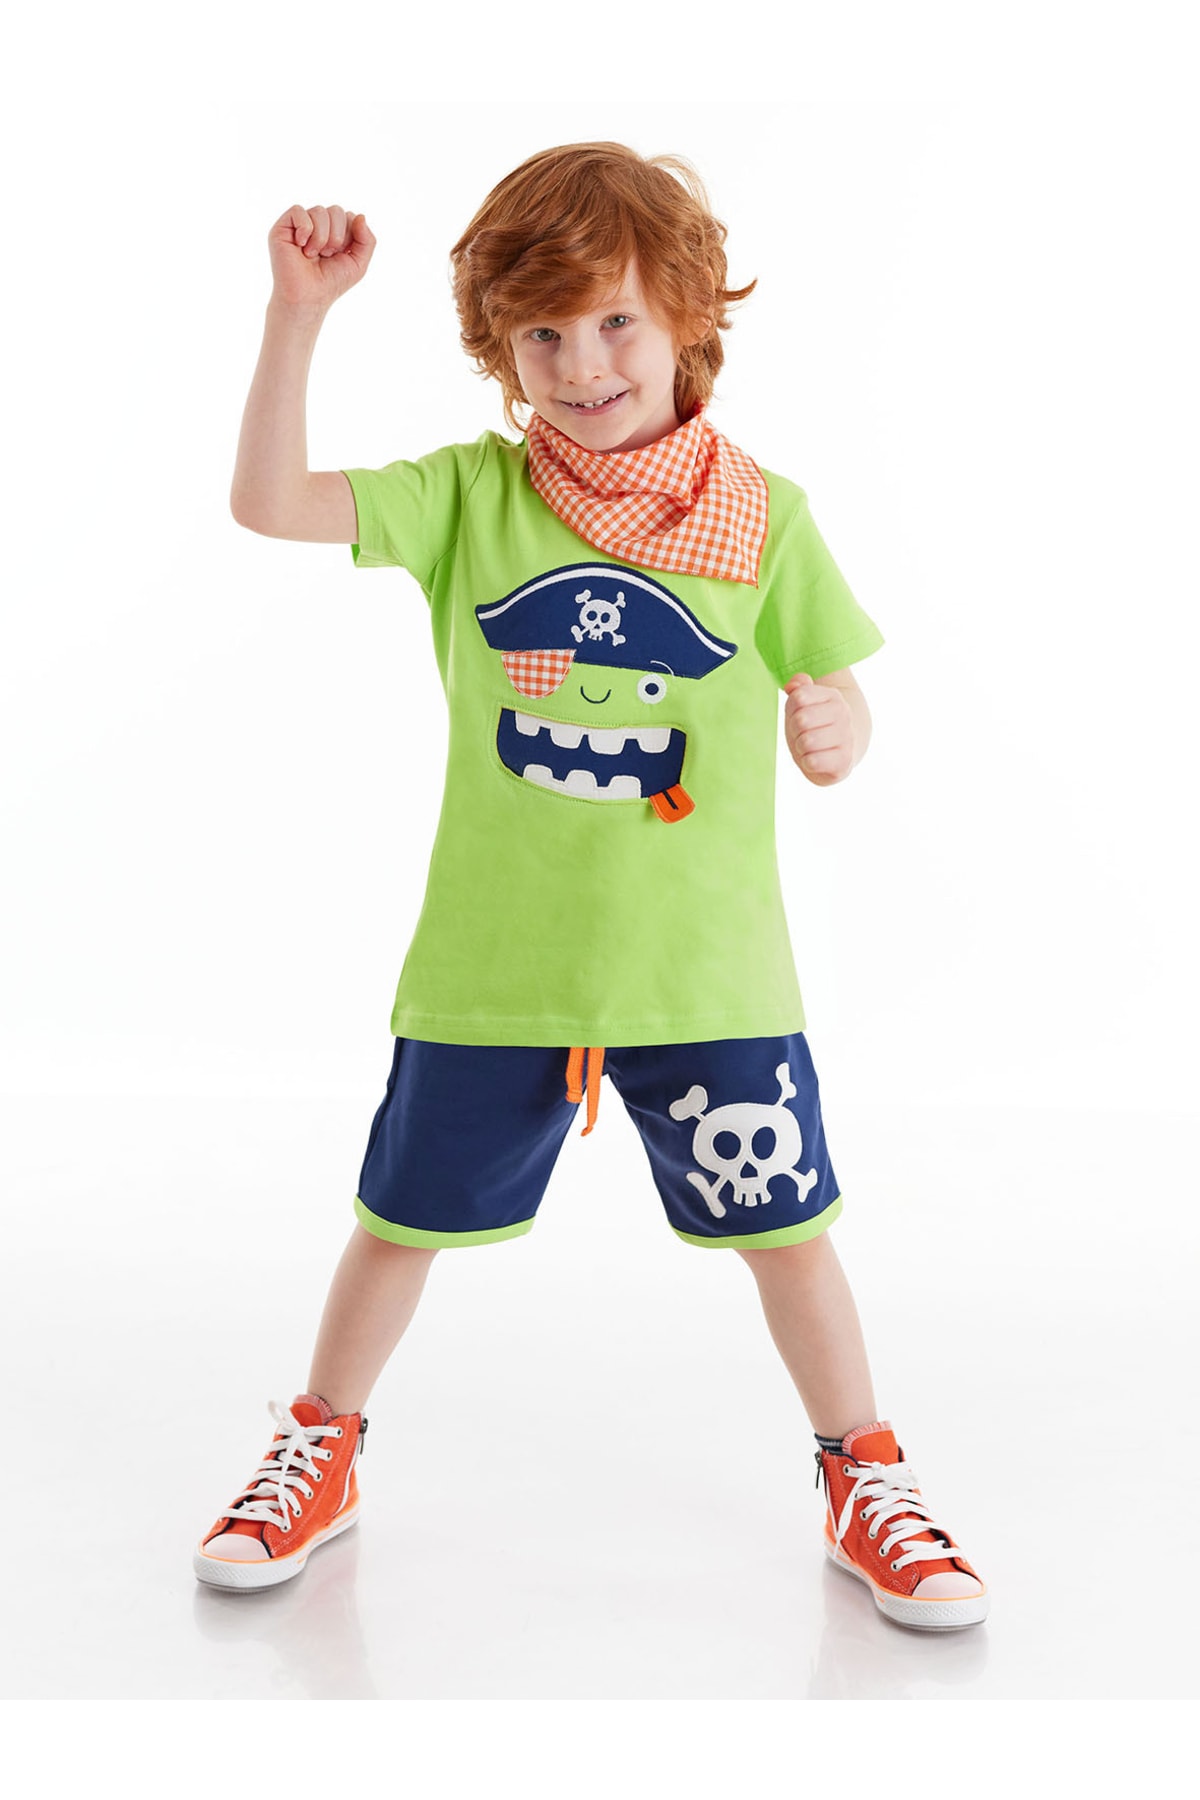 Denokids 3d Green Pirate Kids T-shirt Shorts Bandana Set